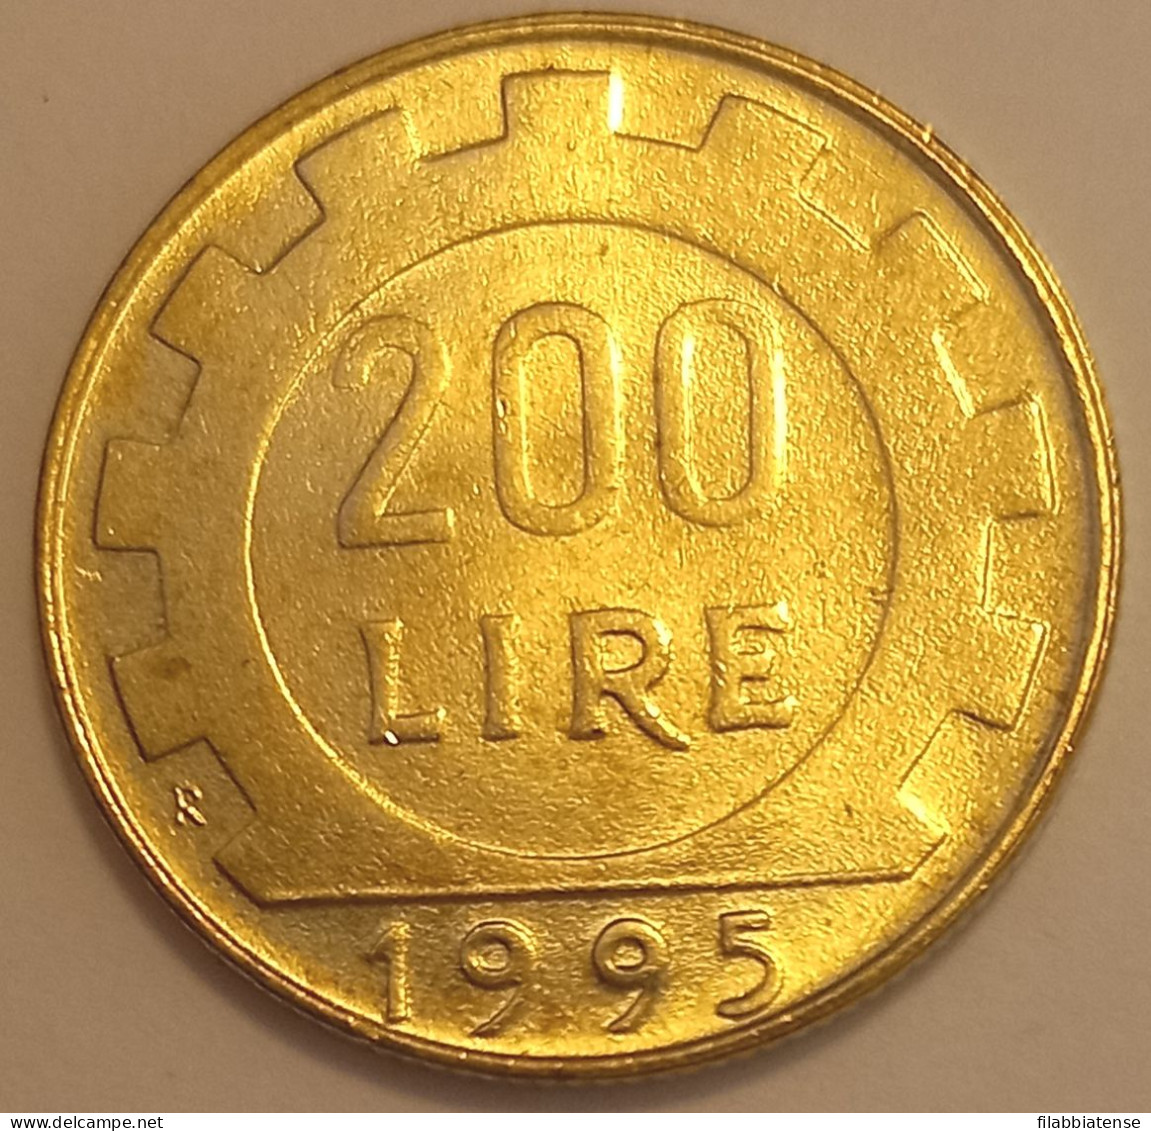 1995 - Italia 200 Lire     ------- - 200 Lire